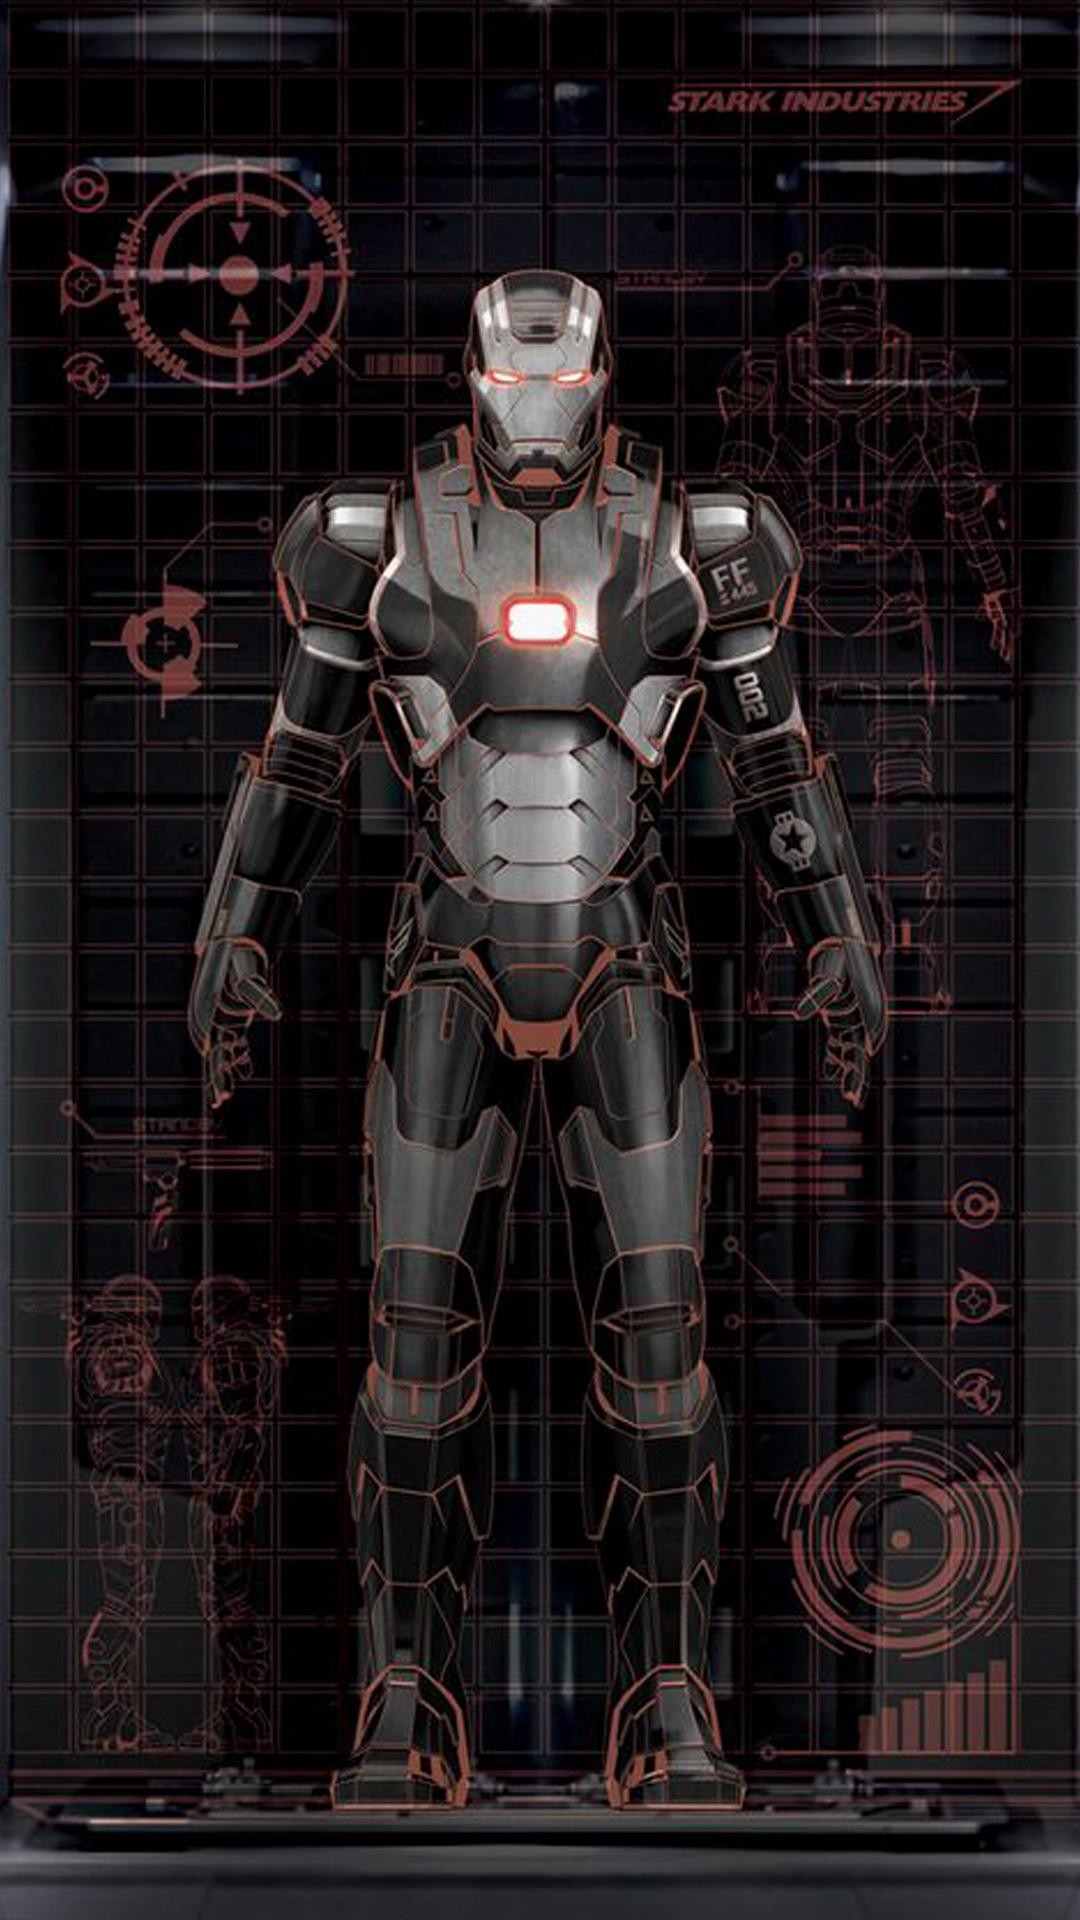 Wallpaper.wiki Iron Man 8 bit iphone backgrounds